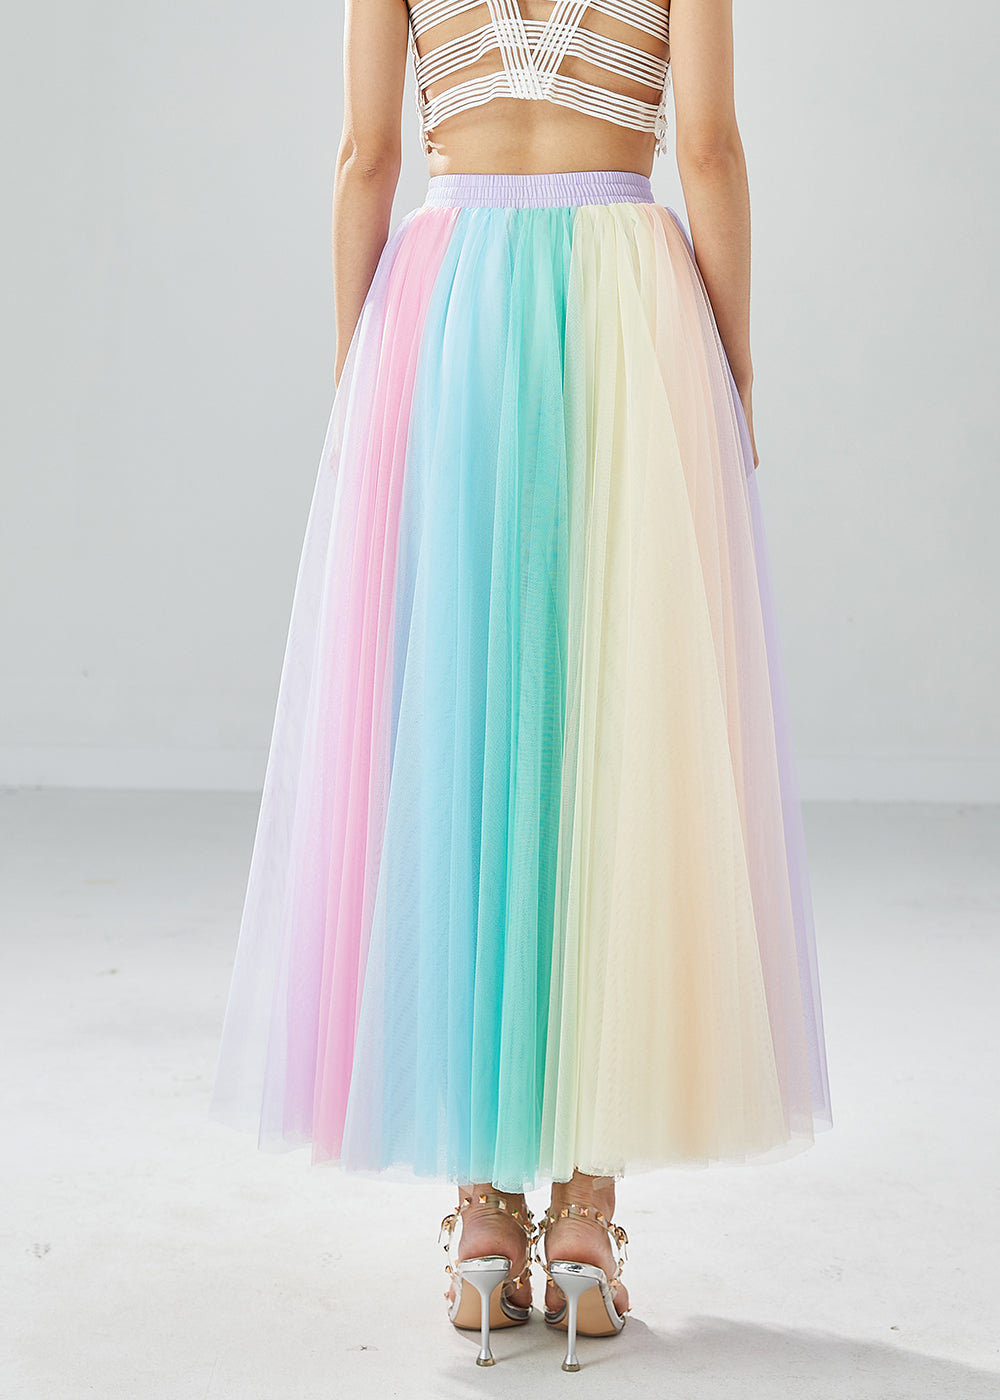 Boho Rainbow Elastic Waist Exra Large Hem Tulle Pleated Skirts Summer LY6079 - fabuloryshop